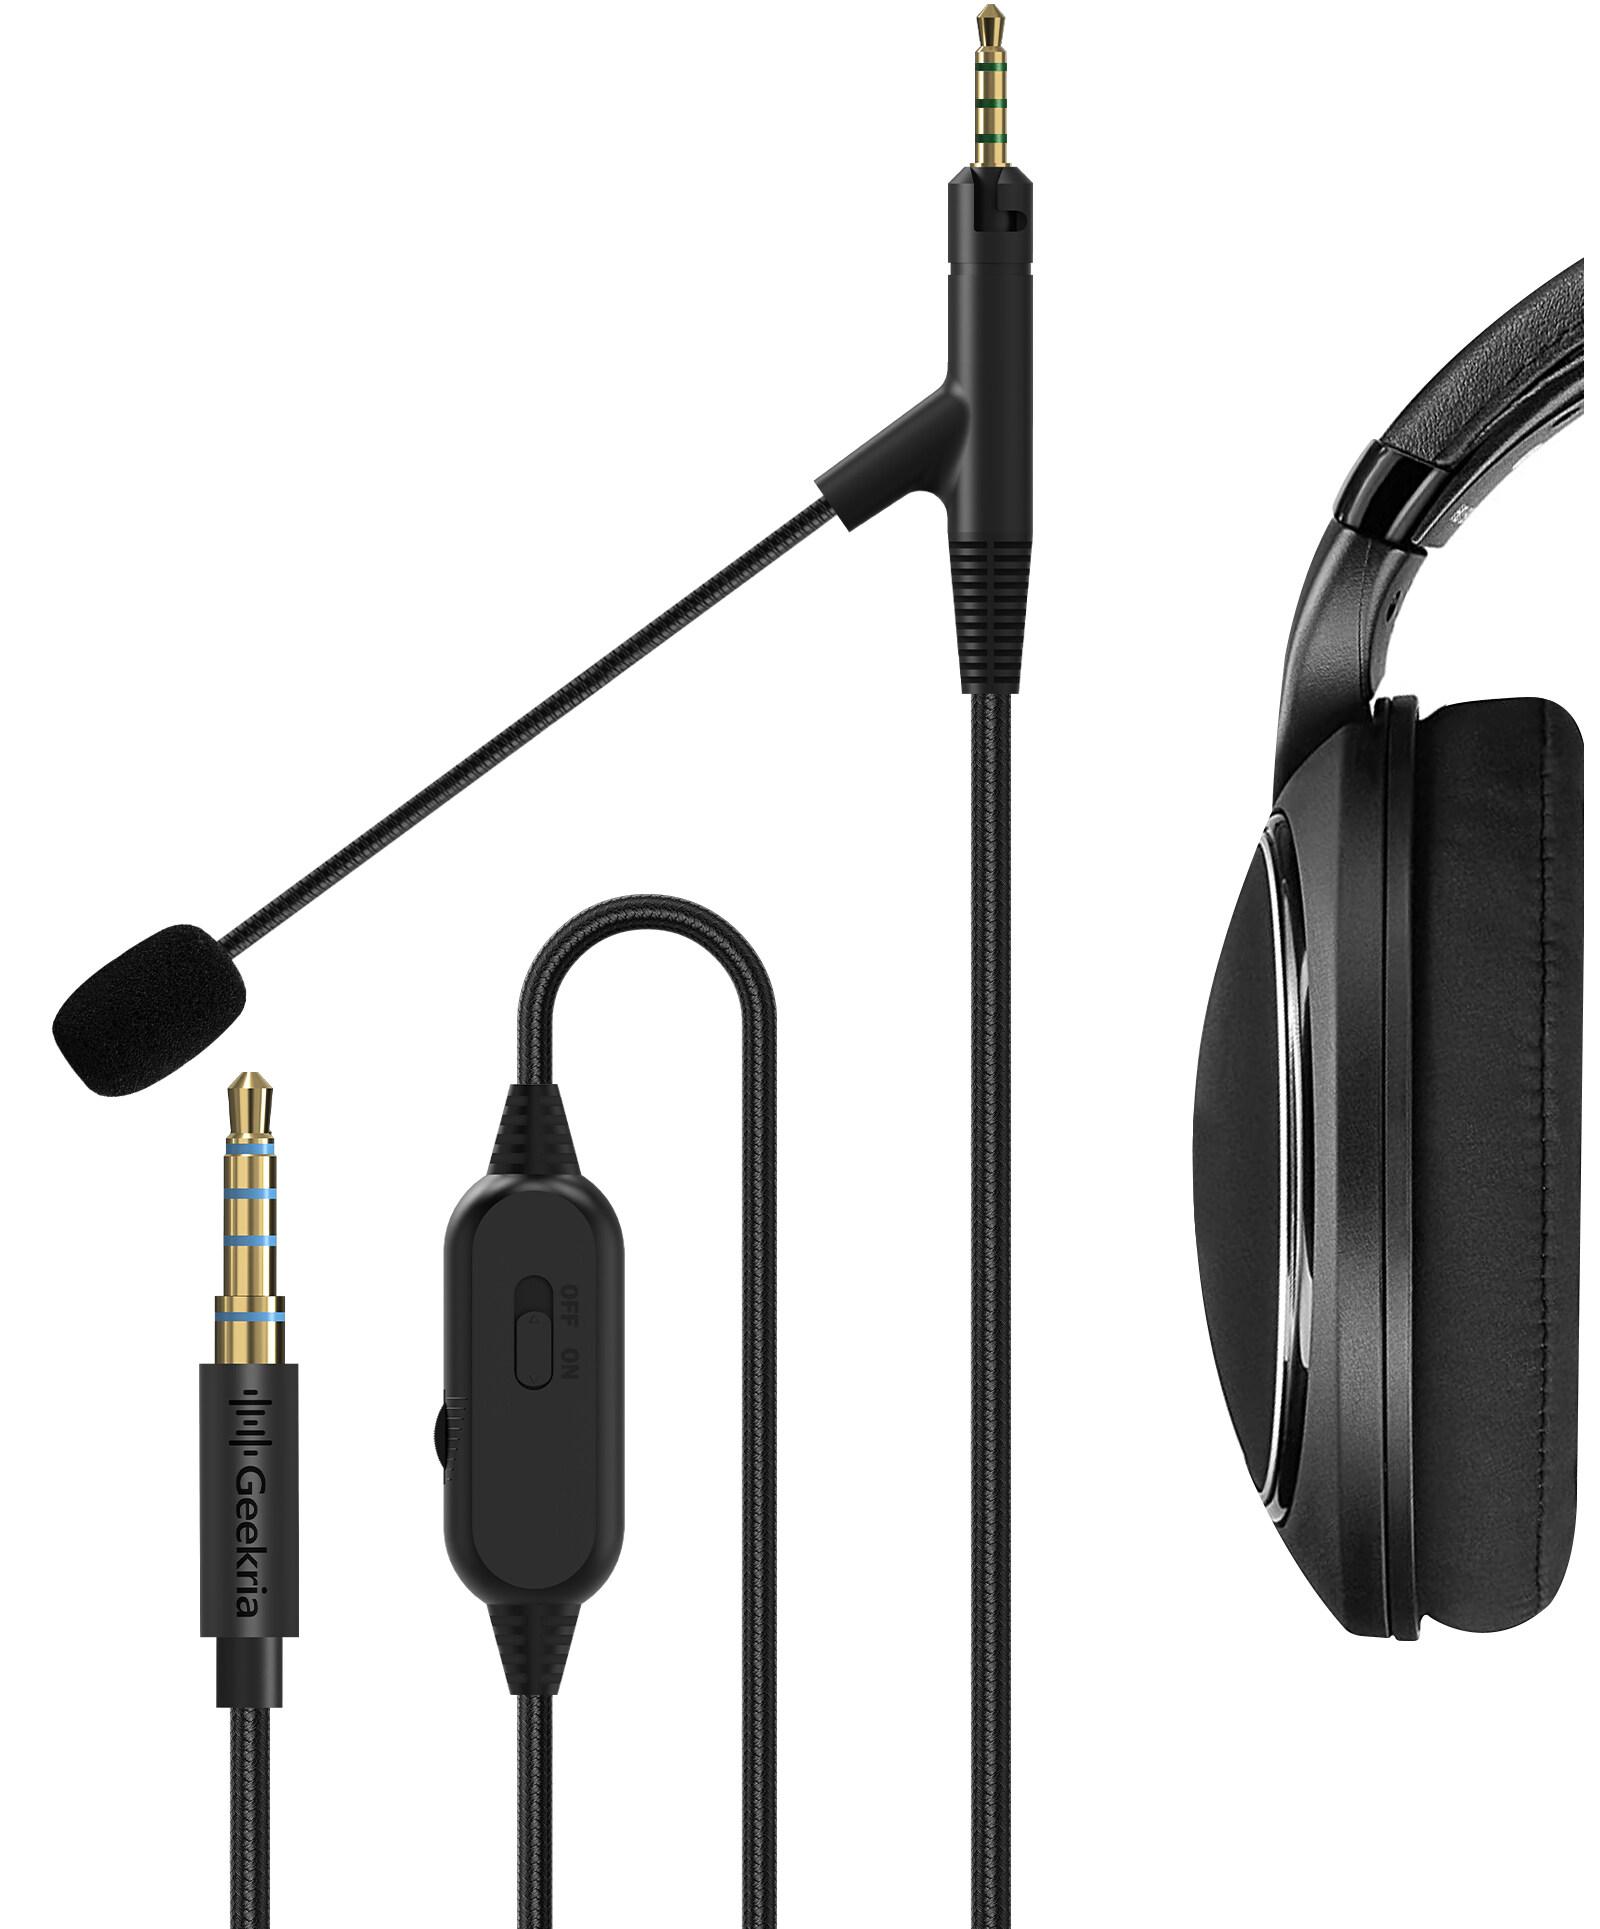 Aux Audio Cable for Sennheiser HD 598SR Over-Ear Headphones Jack Plug Lead 0.5m 